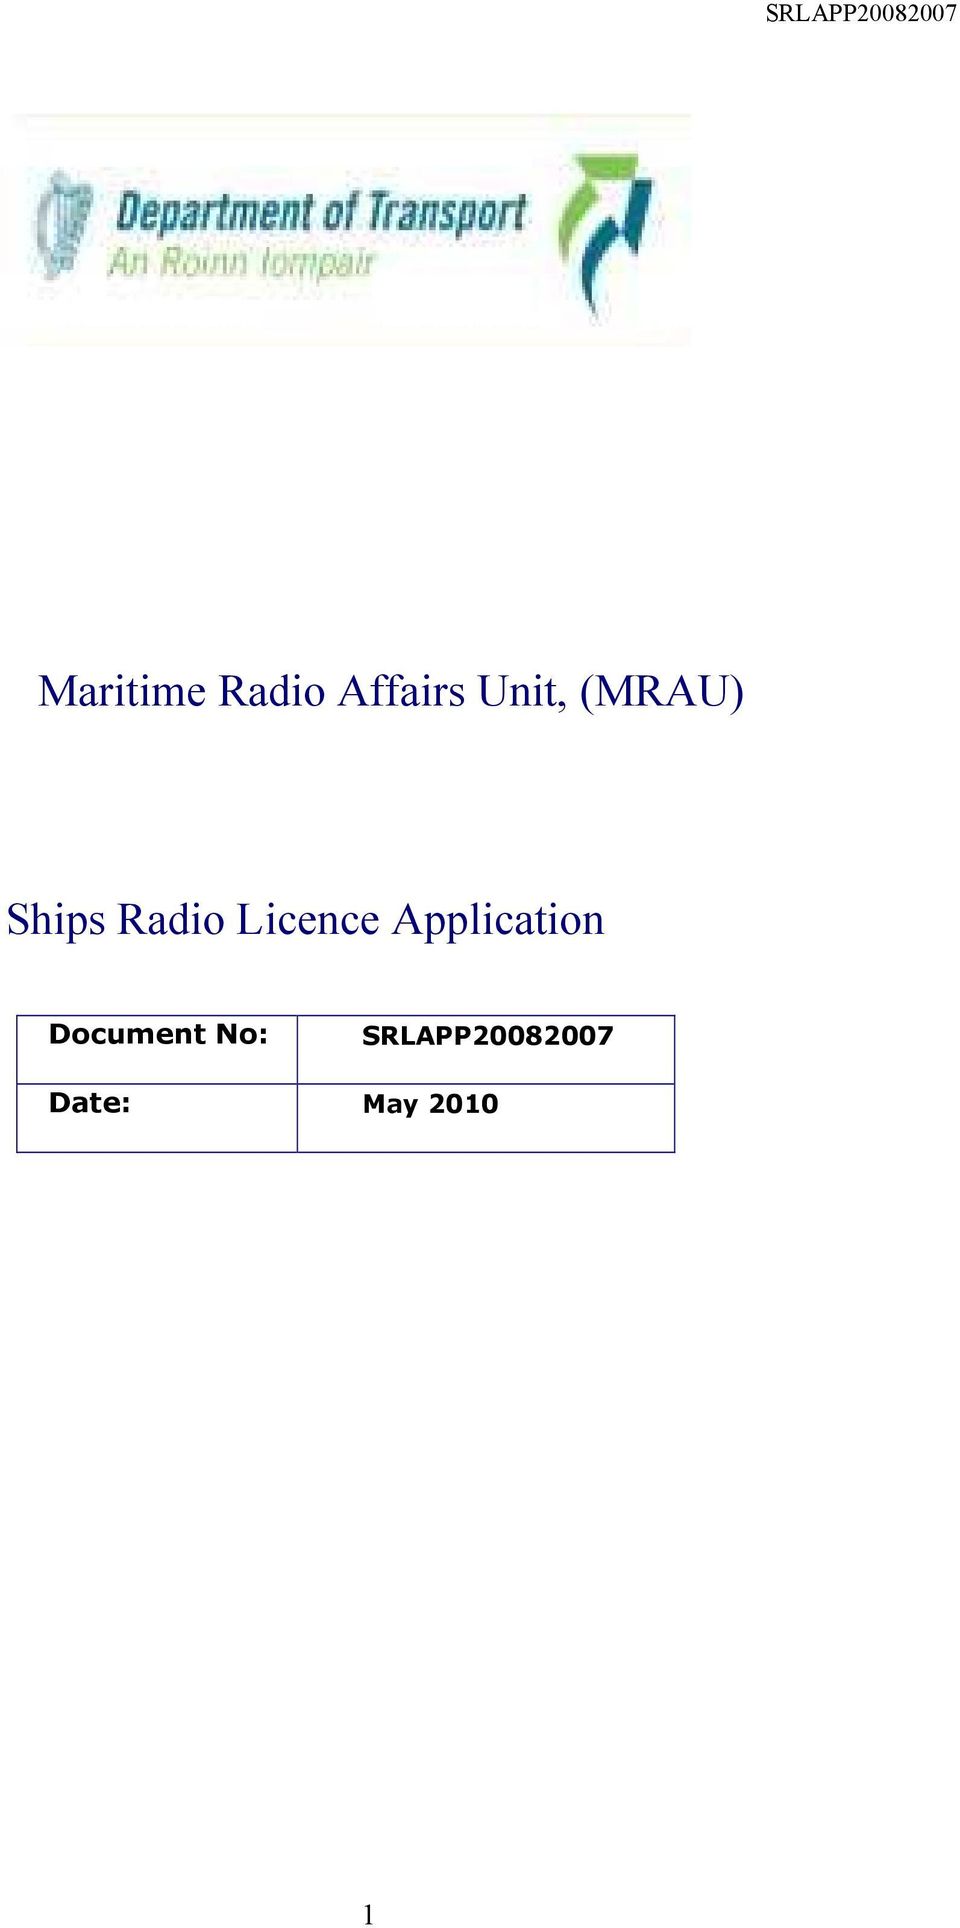 Ships Radio Licence Application